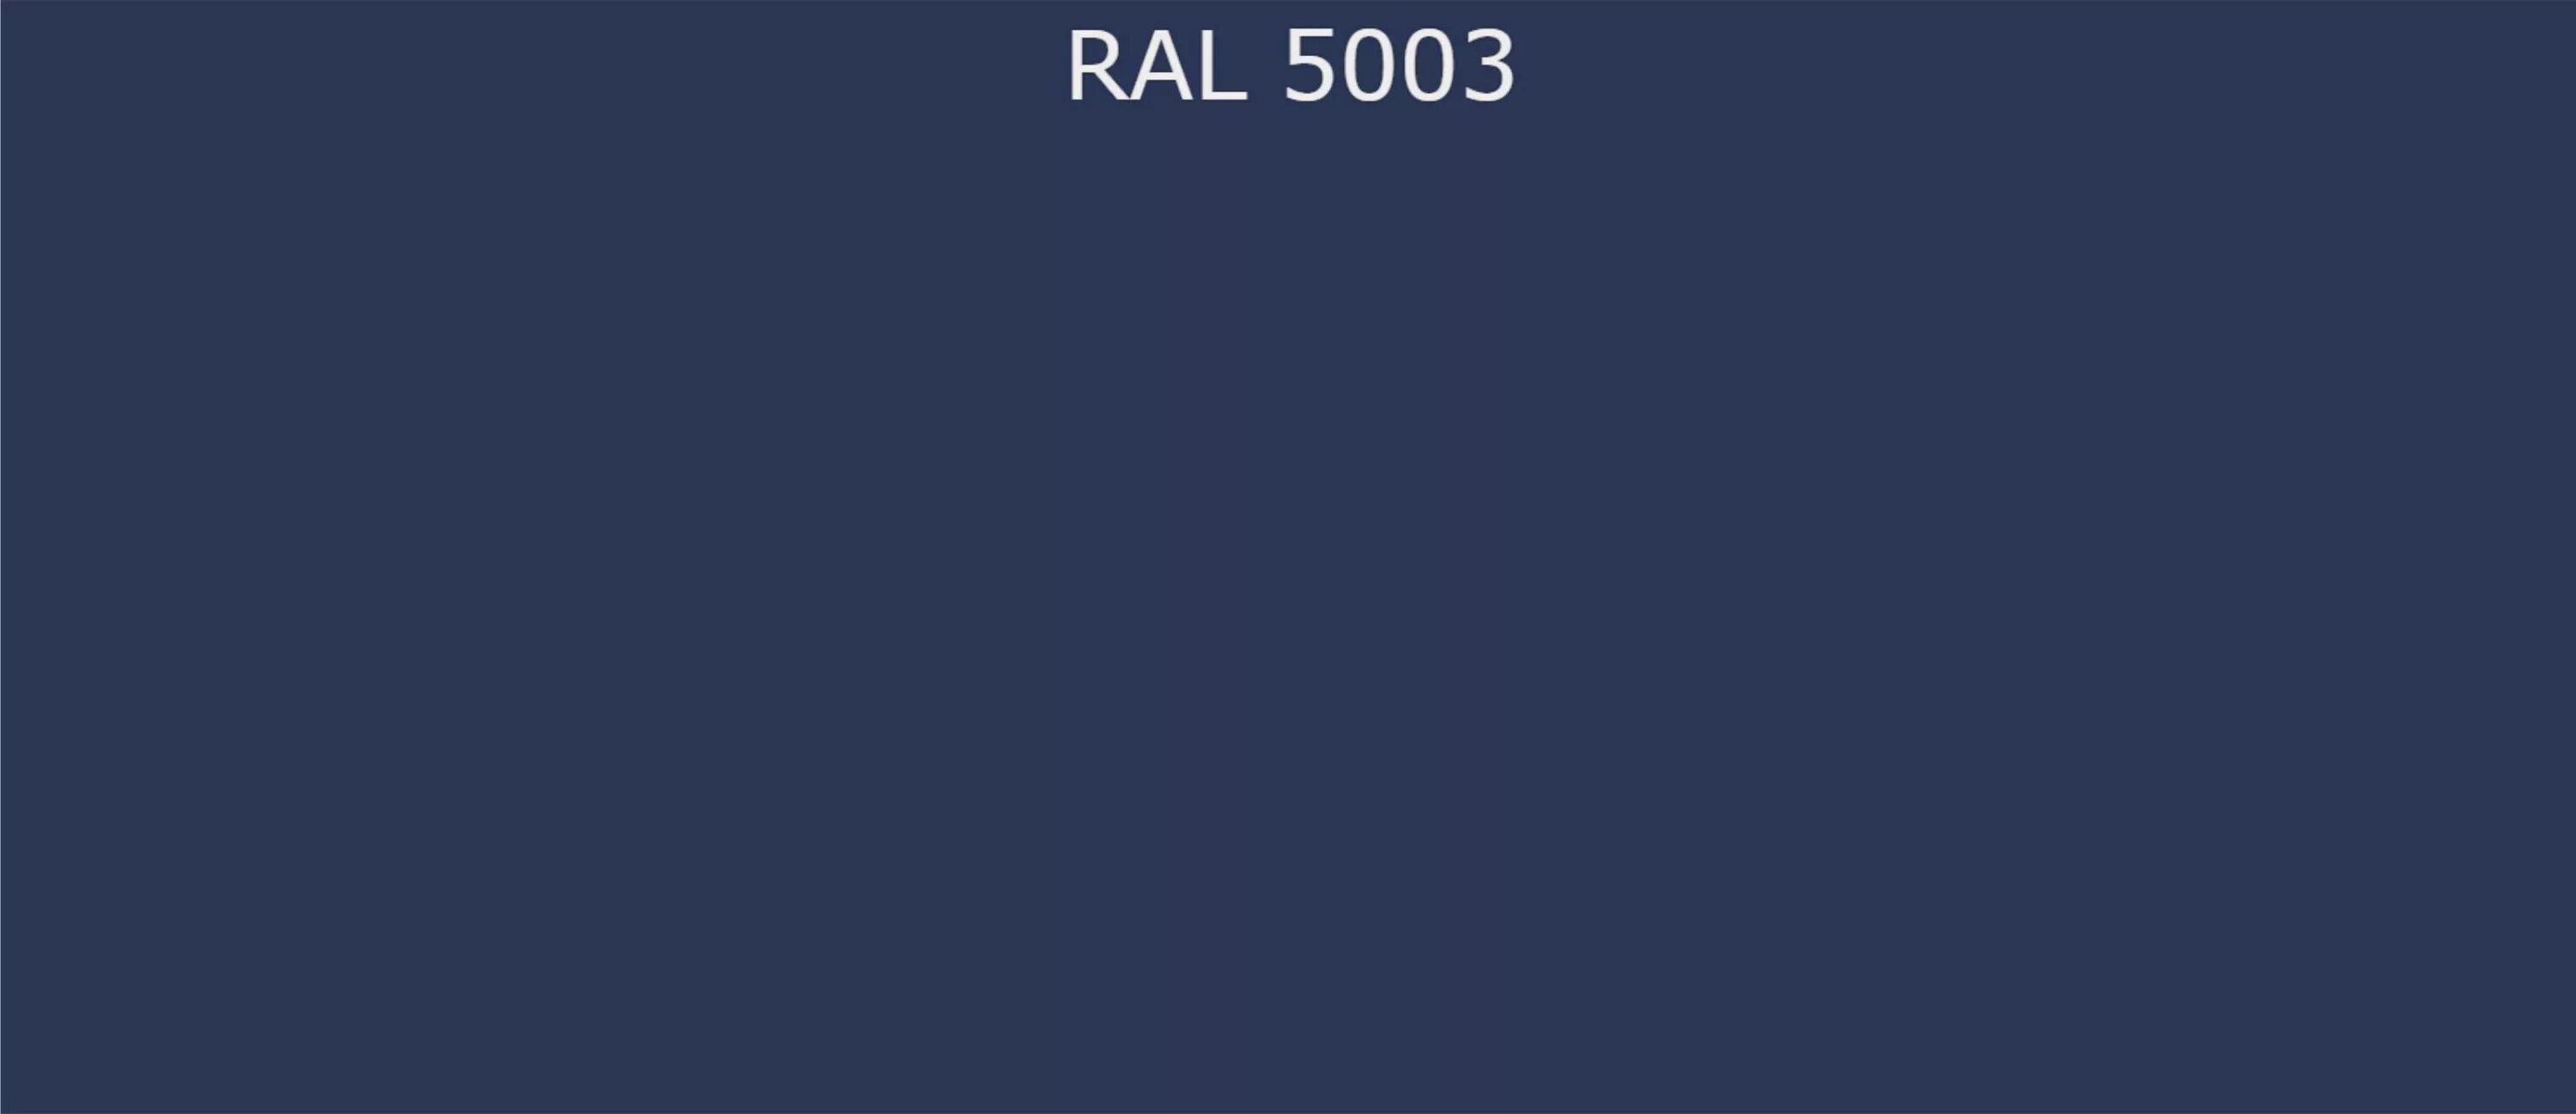 Новый рал 8 северный лис читать. Цвет RAL 5003. Цвет RAL 5013. Краска рал 5003. RAL 5000 Violet Blue.